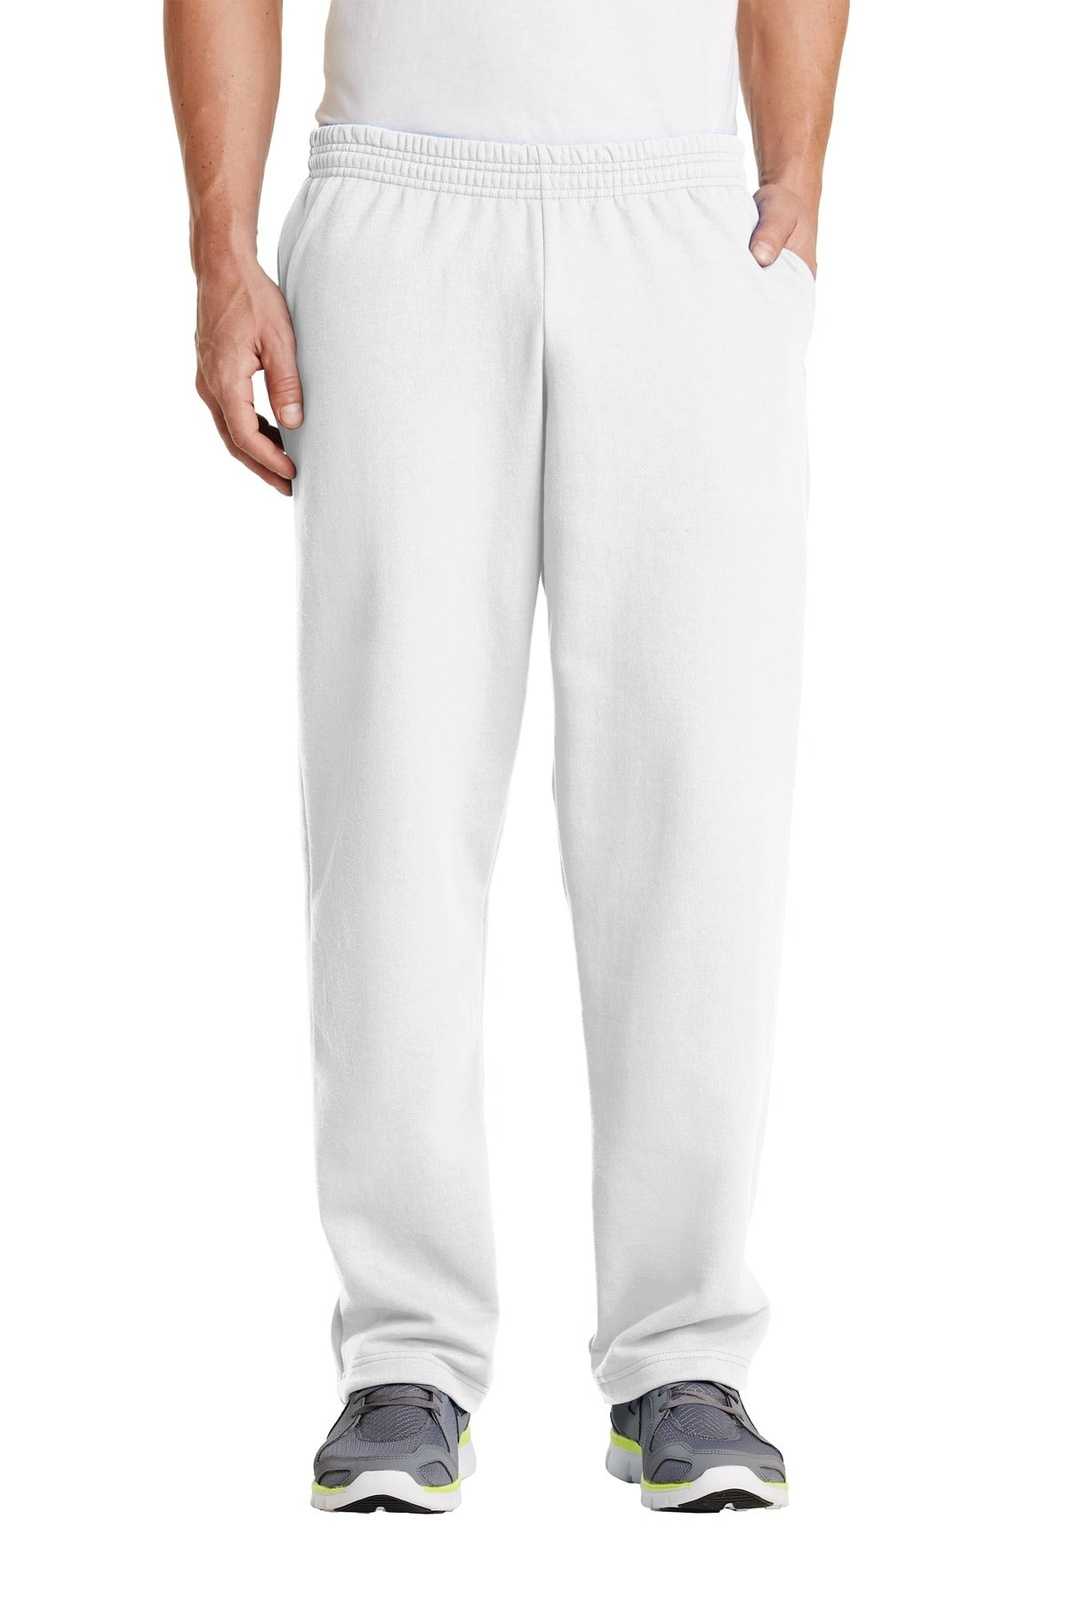 Port & Company PC78P Core Fleece Sweatpant with Pockets - White - HIT a Double - 1